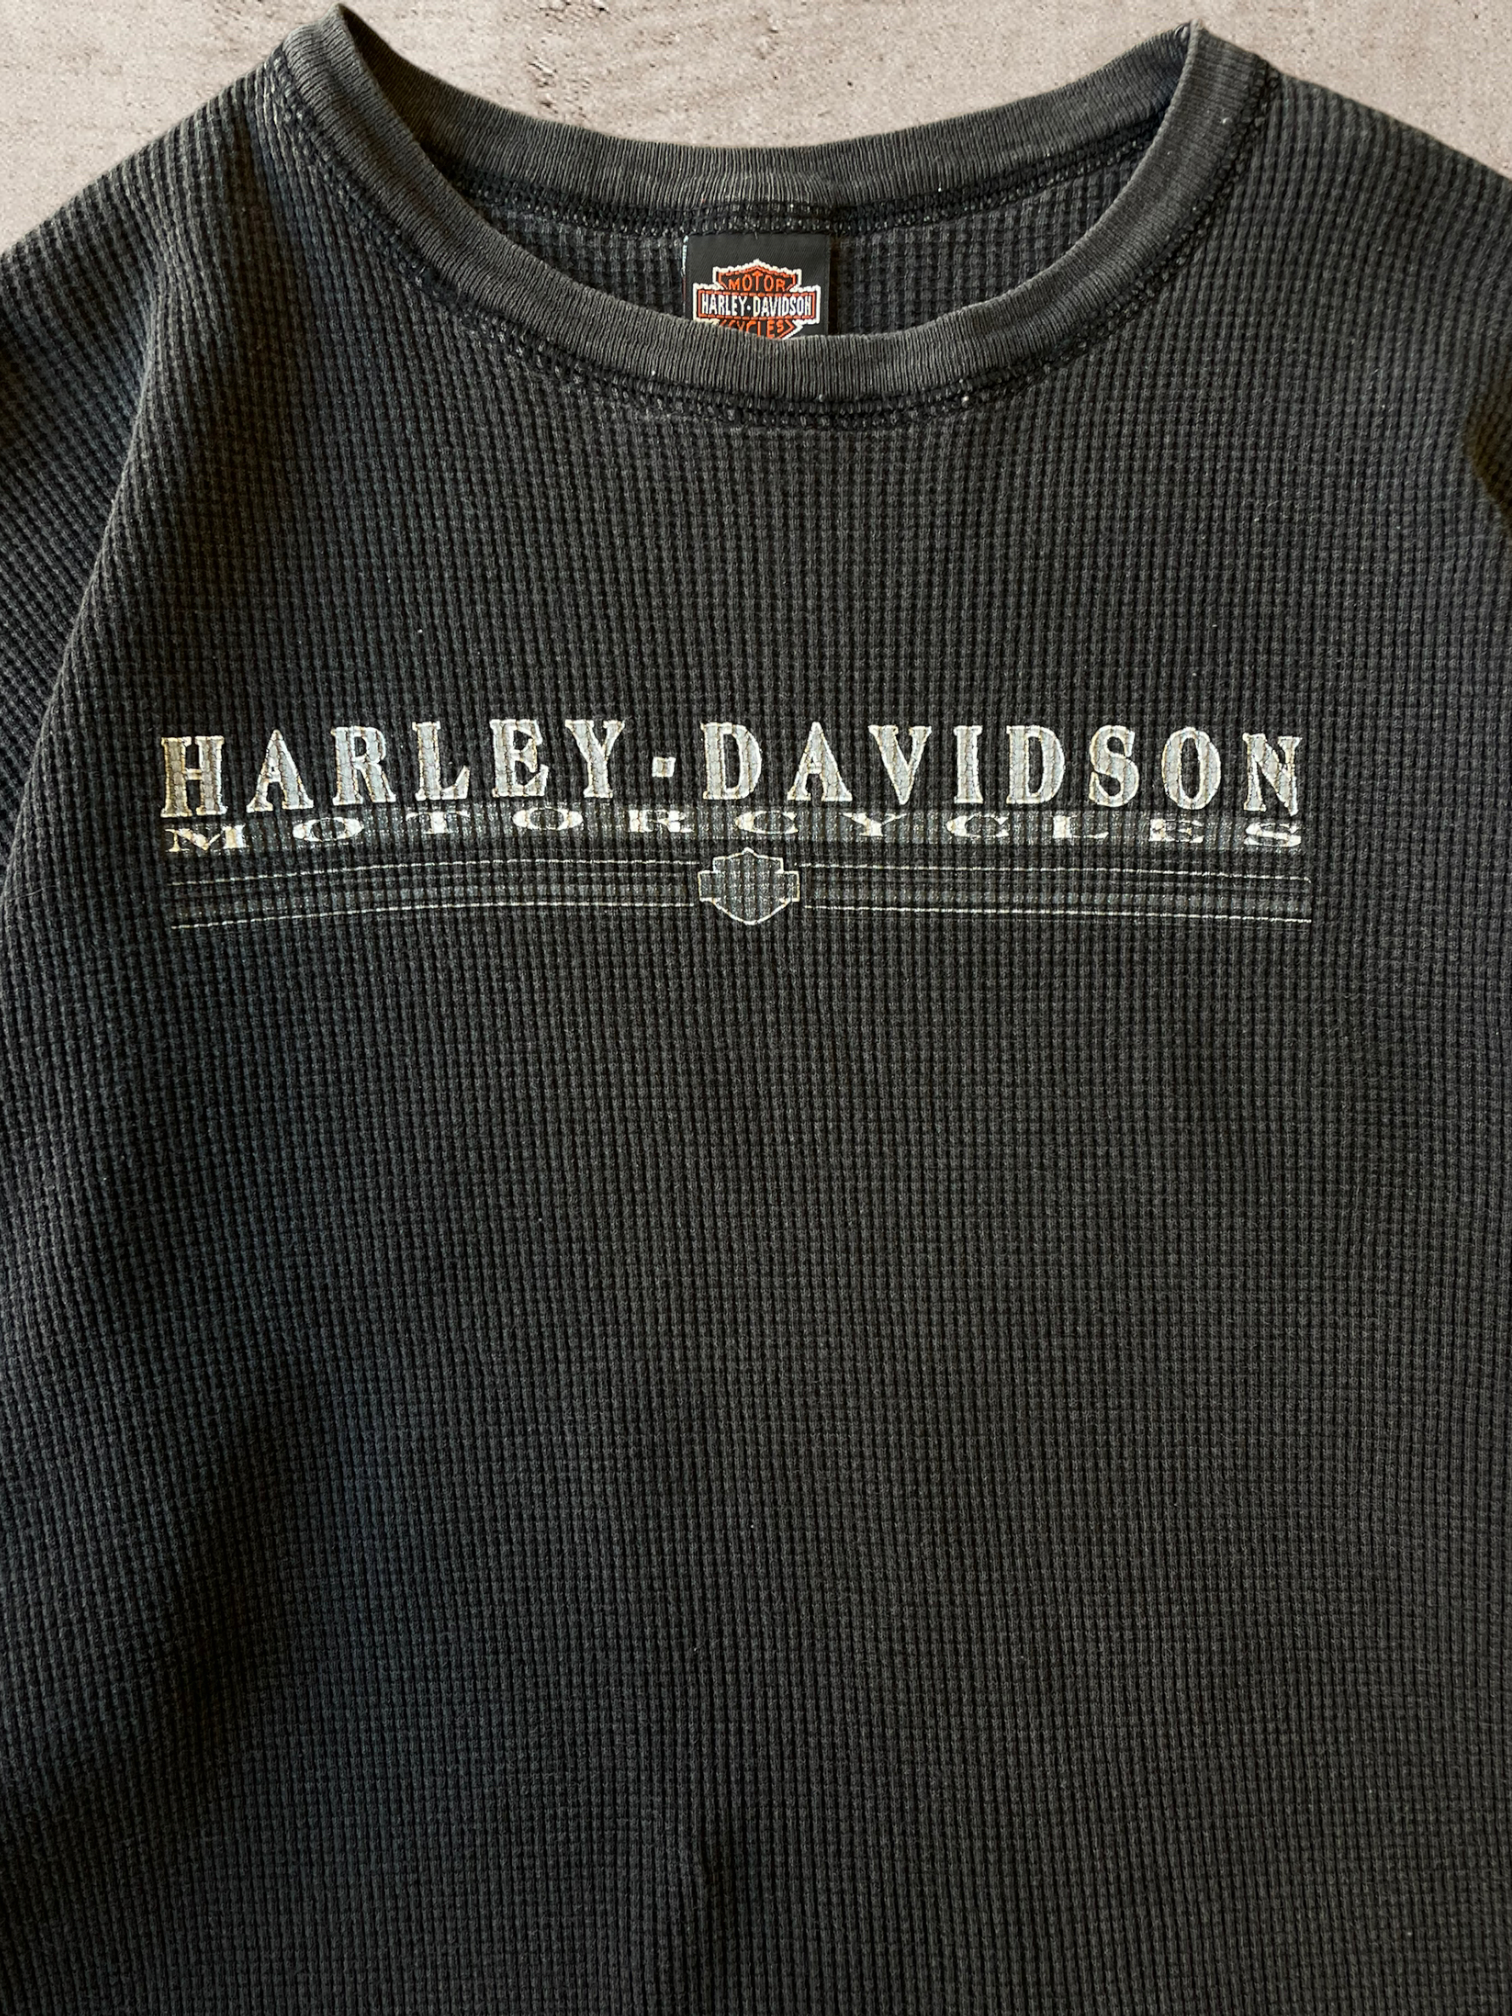 1998 Harley Davidson Thermal Long Sleeve T-Shirt - Large